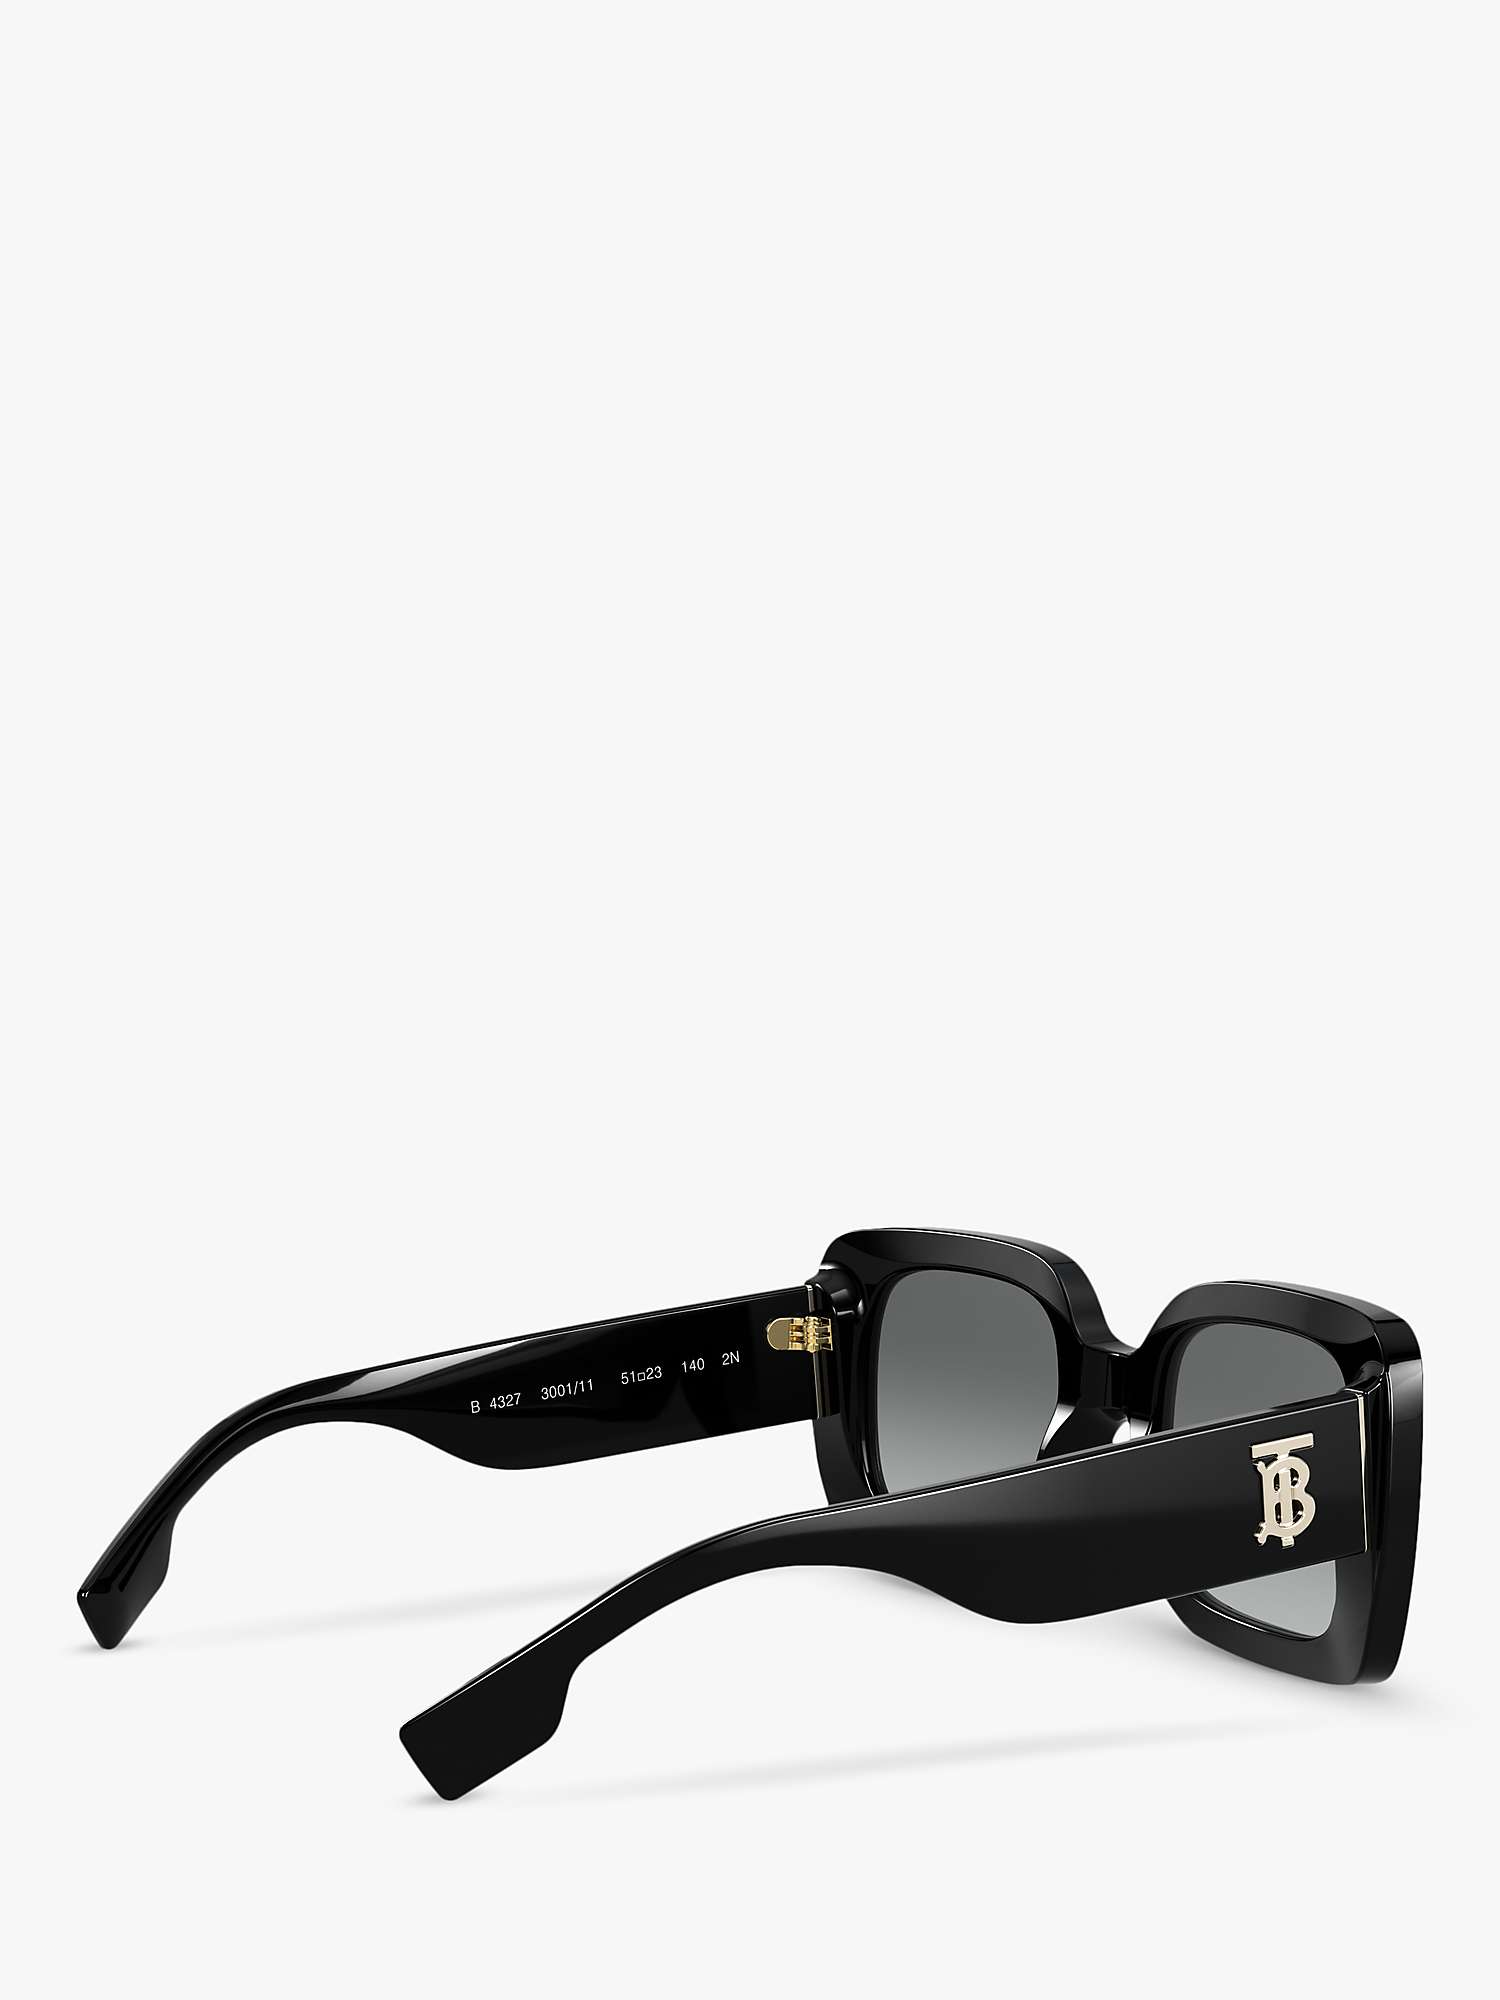 Buy Burberry BE4327 Women's Square Sunglasses, Black/Grey Gradient Online at johnlewis.com